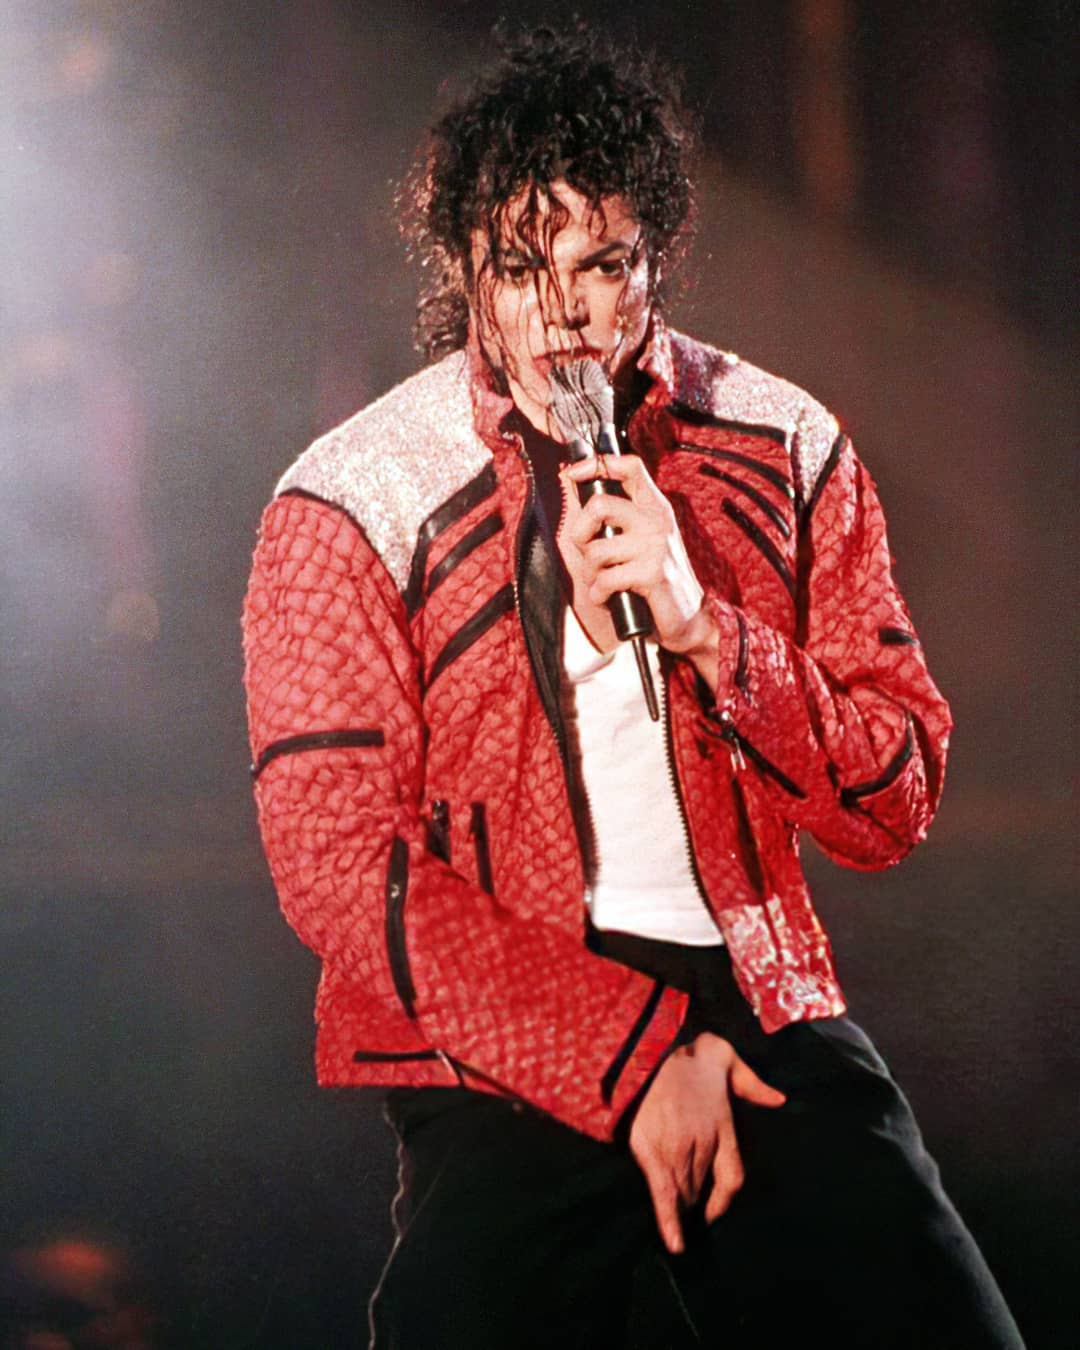 Kvæle lampe efterfølger mjjsource jackson on Twitter: "Michael Jackson Beat It 🔥 | Dangerous World  Tour Frankfurt, Germany August 28, 1992. #michaeljackson  #dangerousworldtour #beatit #frankfurt #kingofpop #celebrities  #dangerousera #soulbrother #germany https://t.co ...